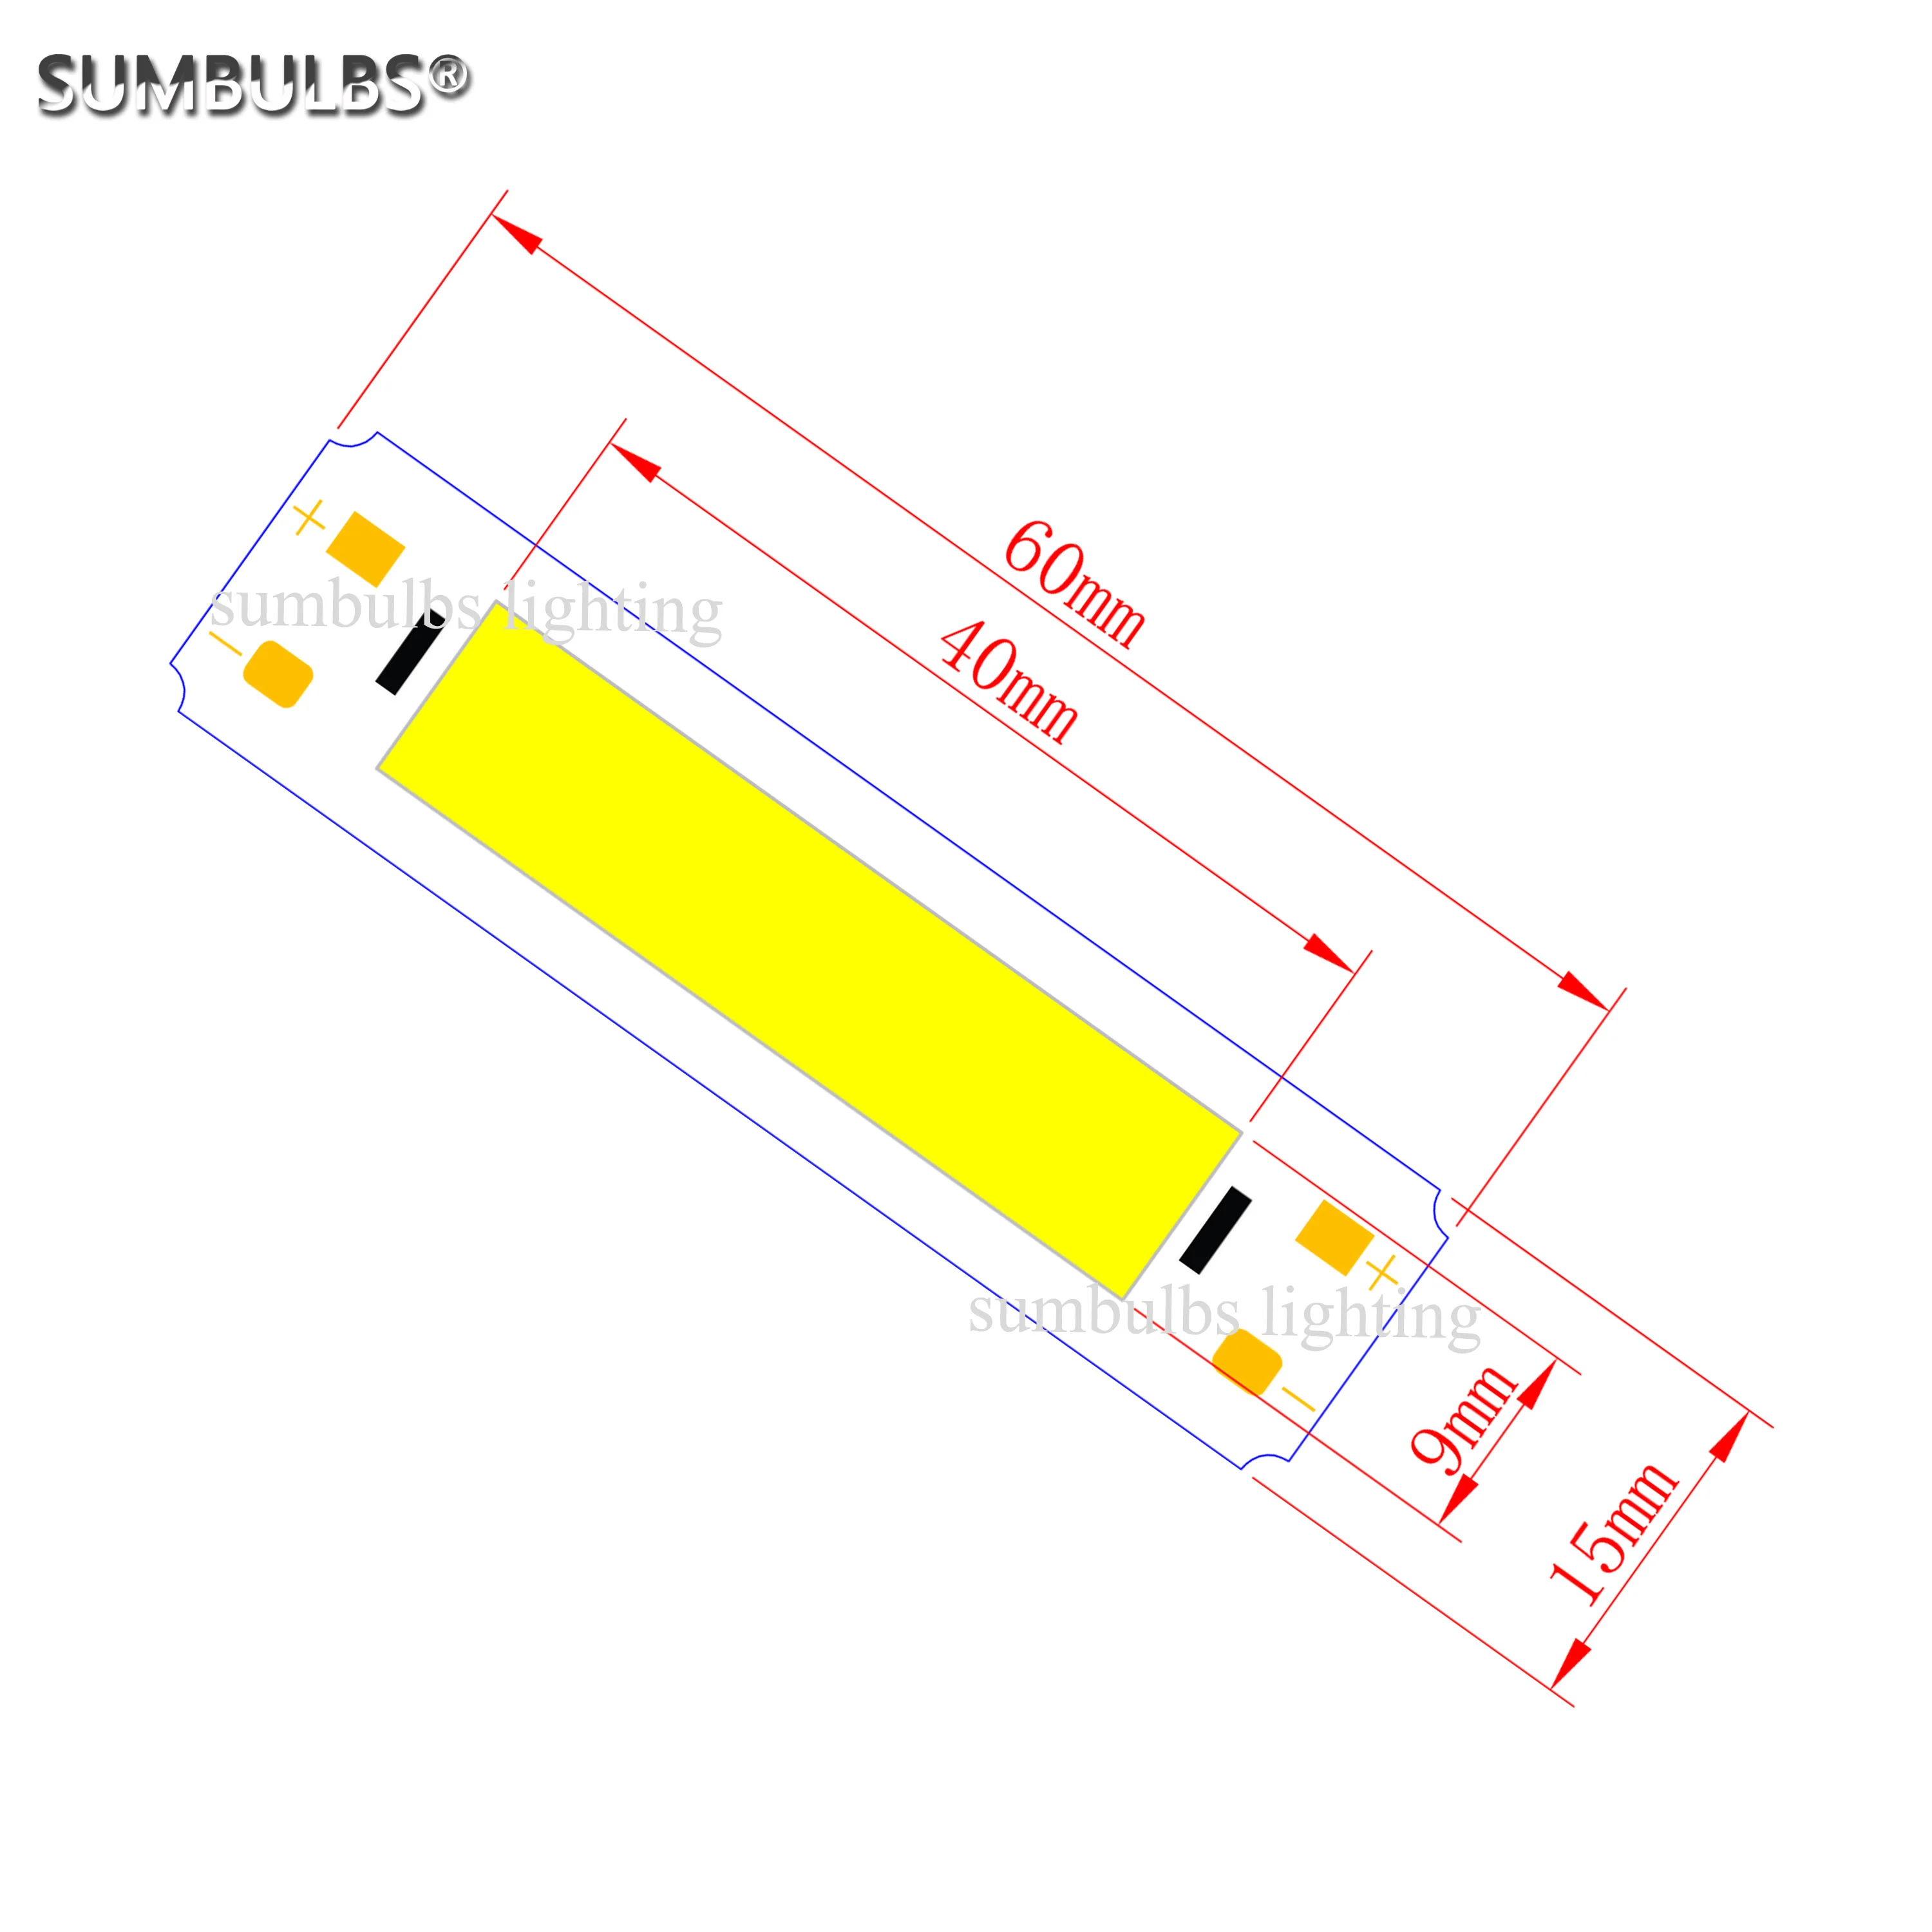 SUMBULBS 5V Input cob led bulb strip light source for DIY USB led lighting 2W 60*15mm 6cm bar lamp chip warm cold white images - 6